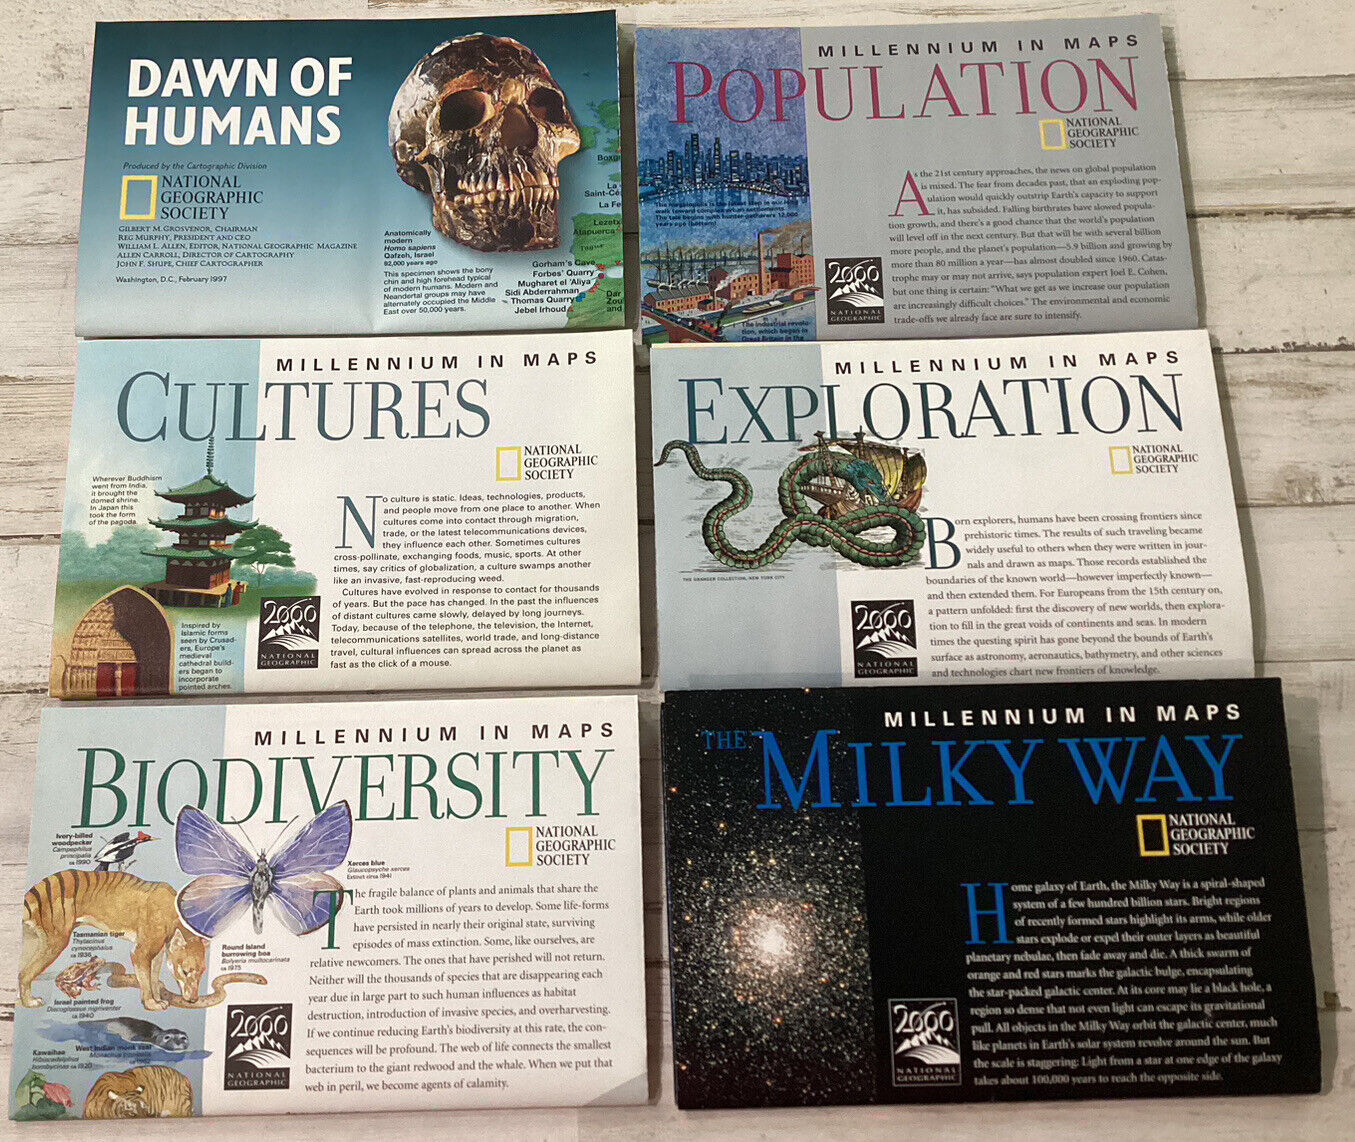 National Geographic Millennium In Maps Series, 1998-99, Milky Way, Biodiversity